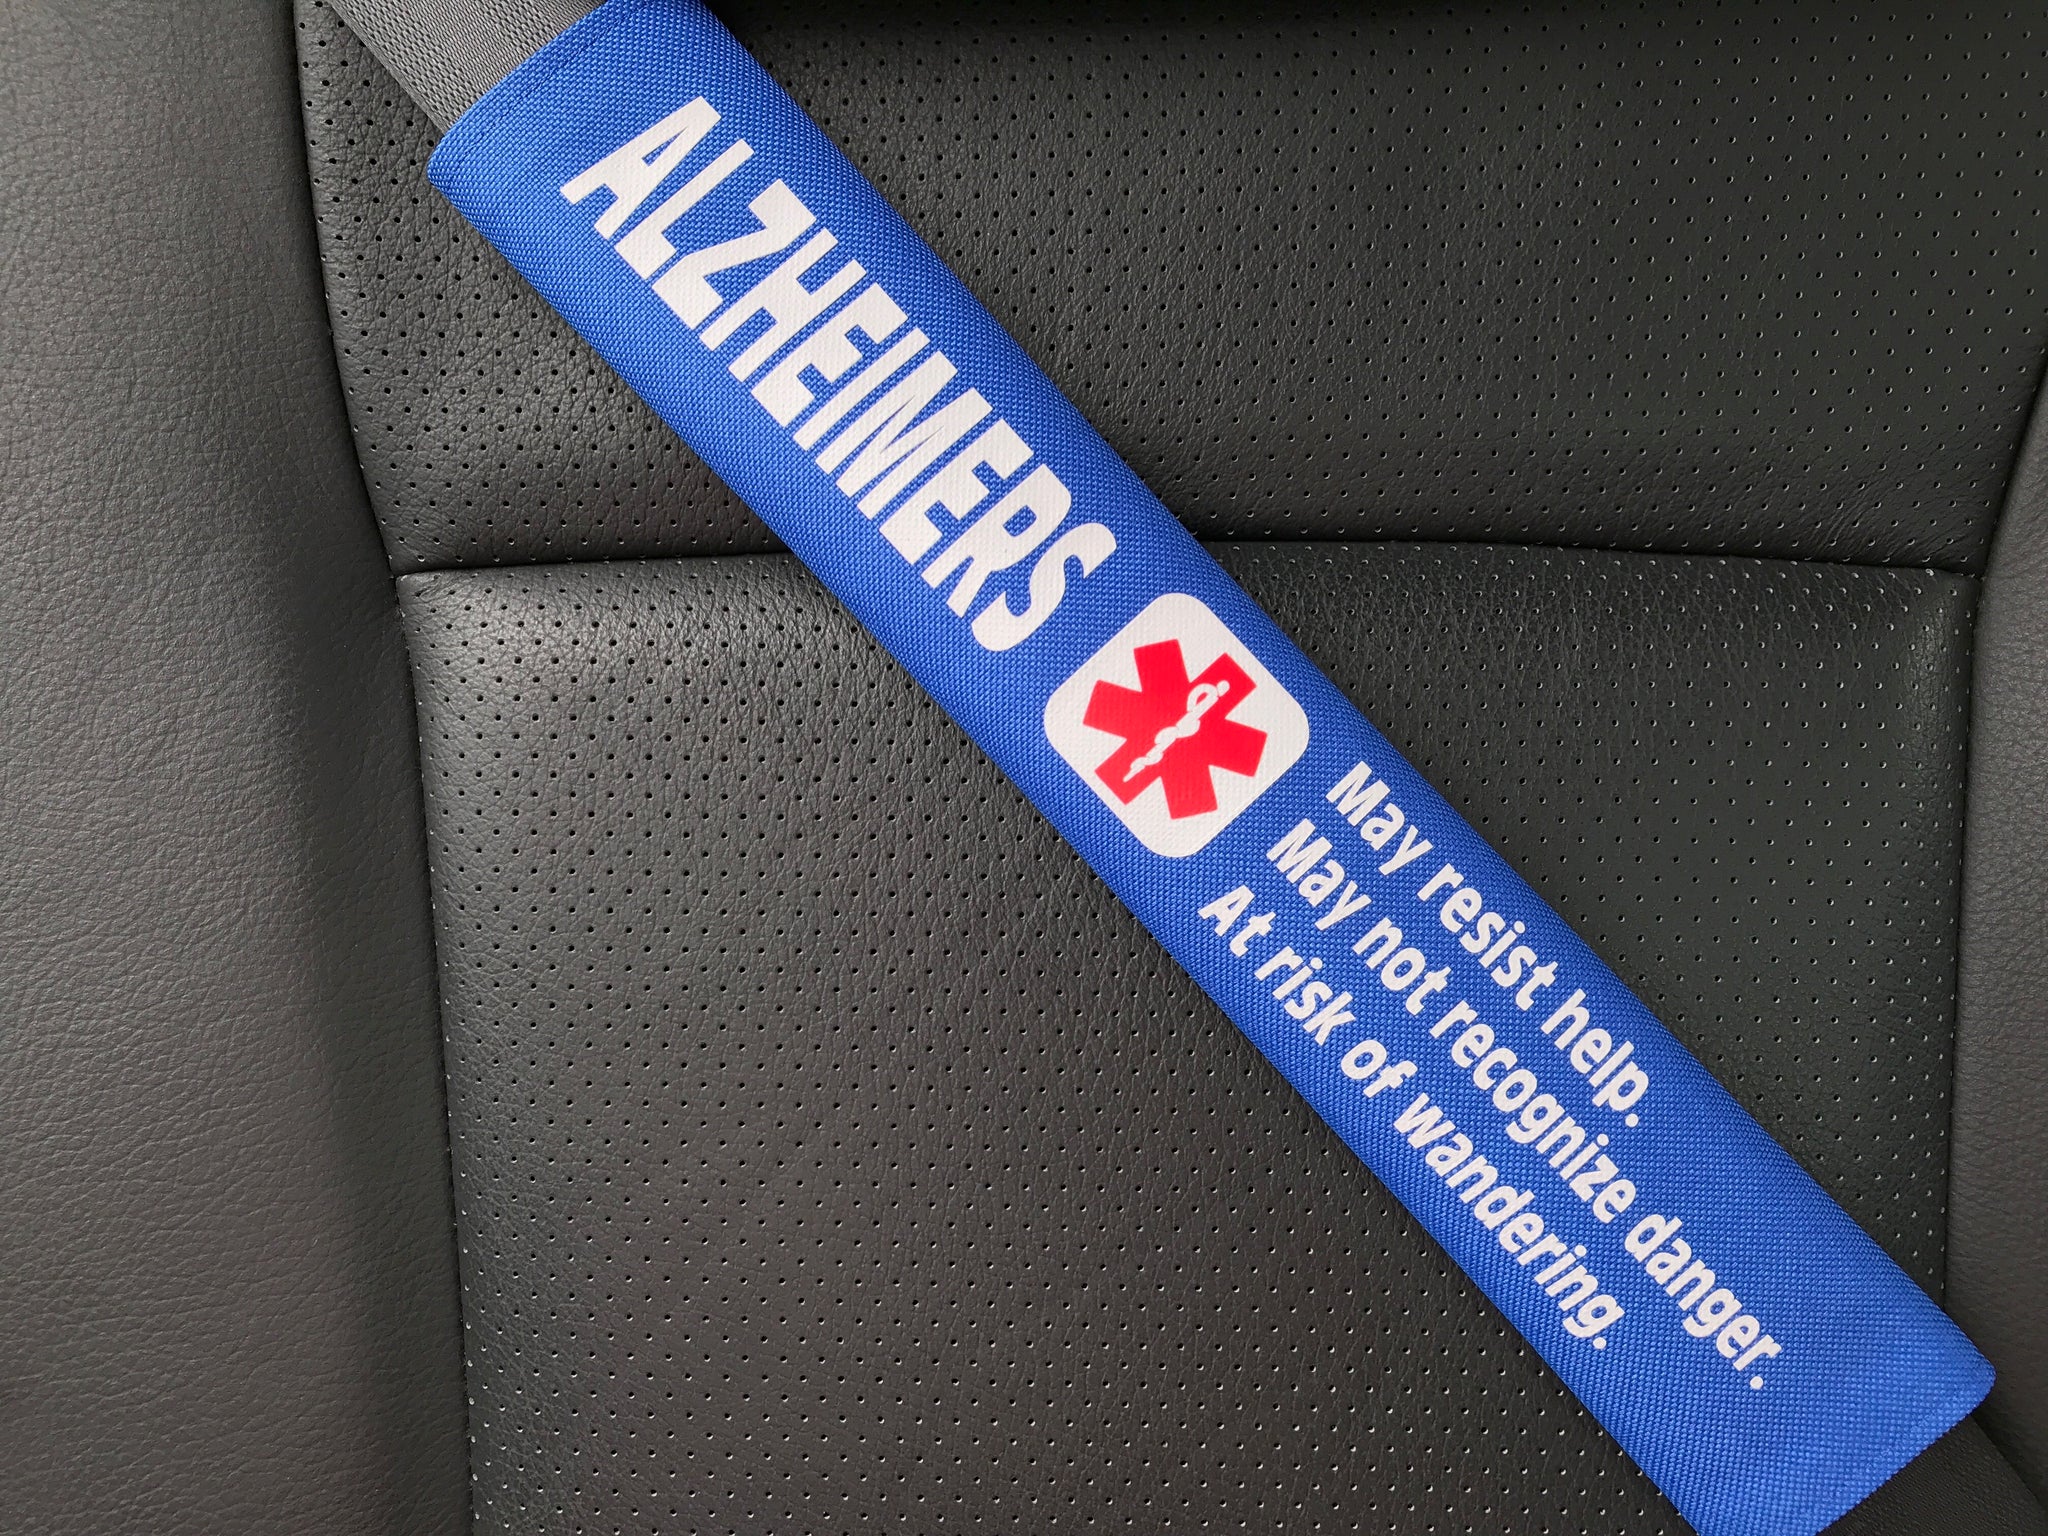 Alzheimers Seat Belt Cover - Window Decal Set Medical Alert – Safety ...